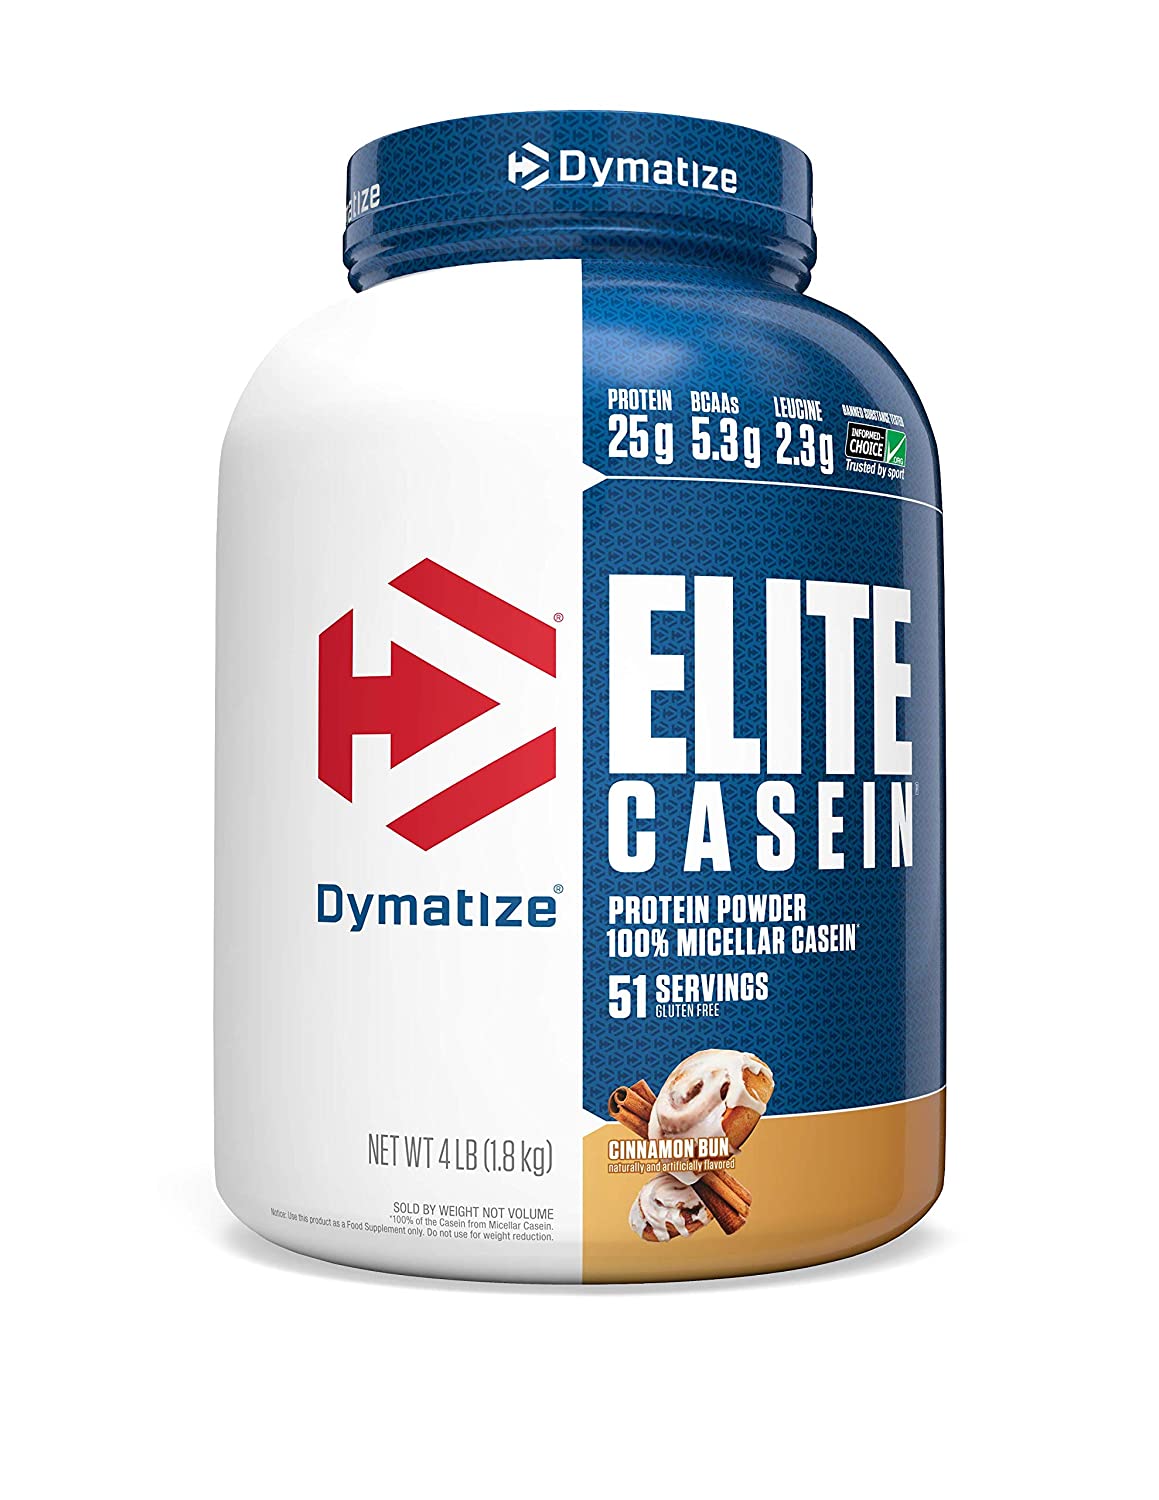 Dymatize Elite Casein 4 lbs Protein Powder with Micellar Casein Image